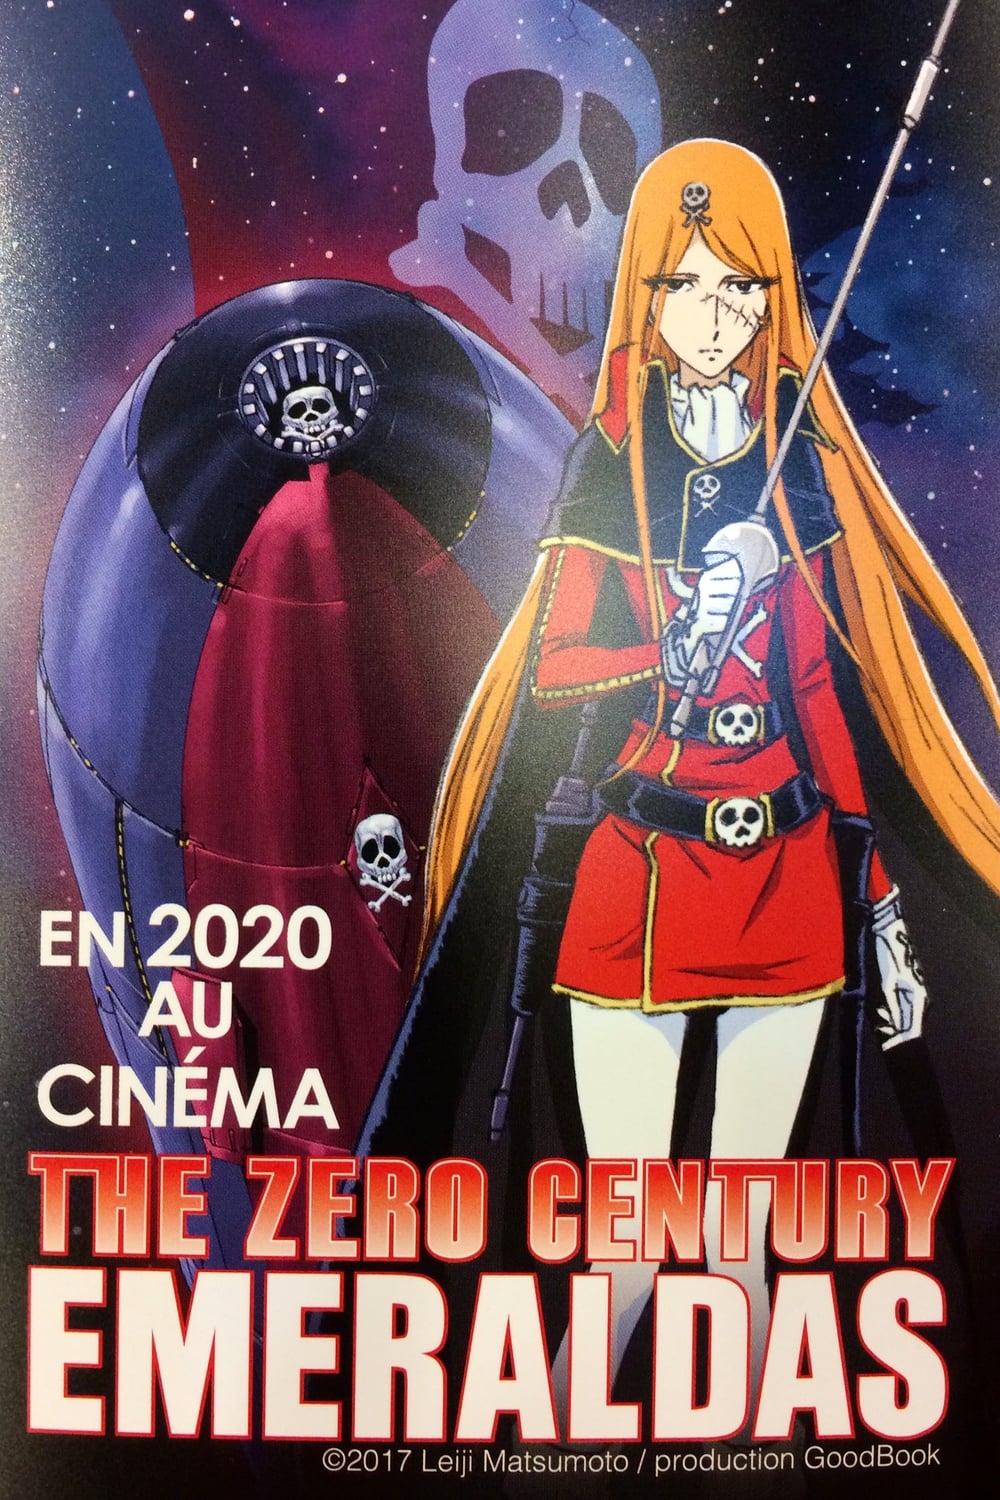 The Zero Century: Emeraldas